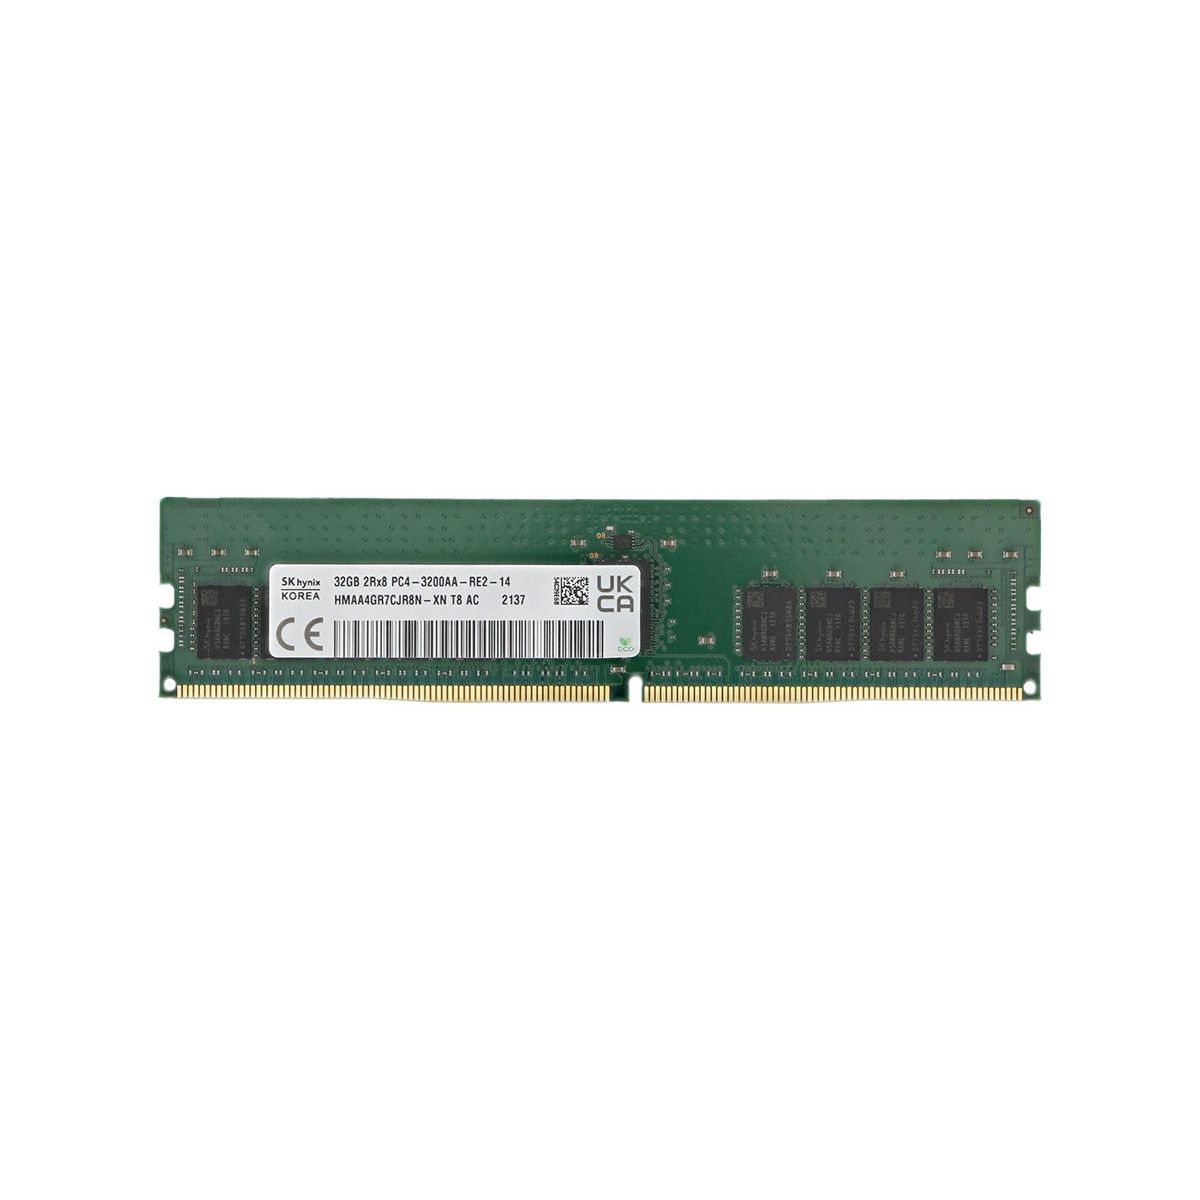 UCSX-MR-X32G1RW-MS - Memstar 1x 32GB DDR4-3200 RDIMM PC4-25600R - OEM compatible con Mem-Star Memoria 1 - Memstar 